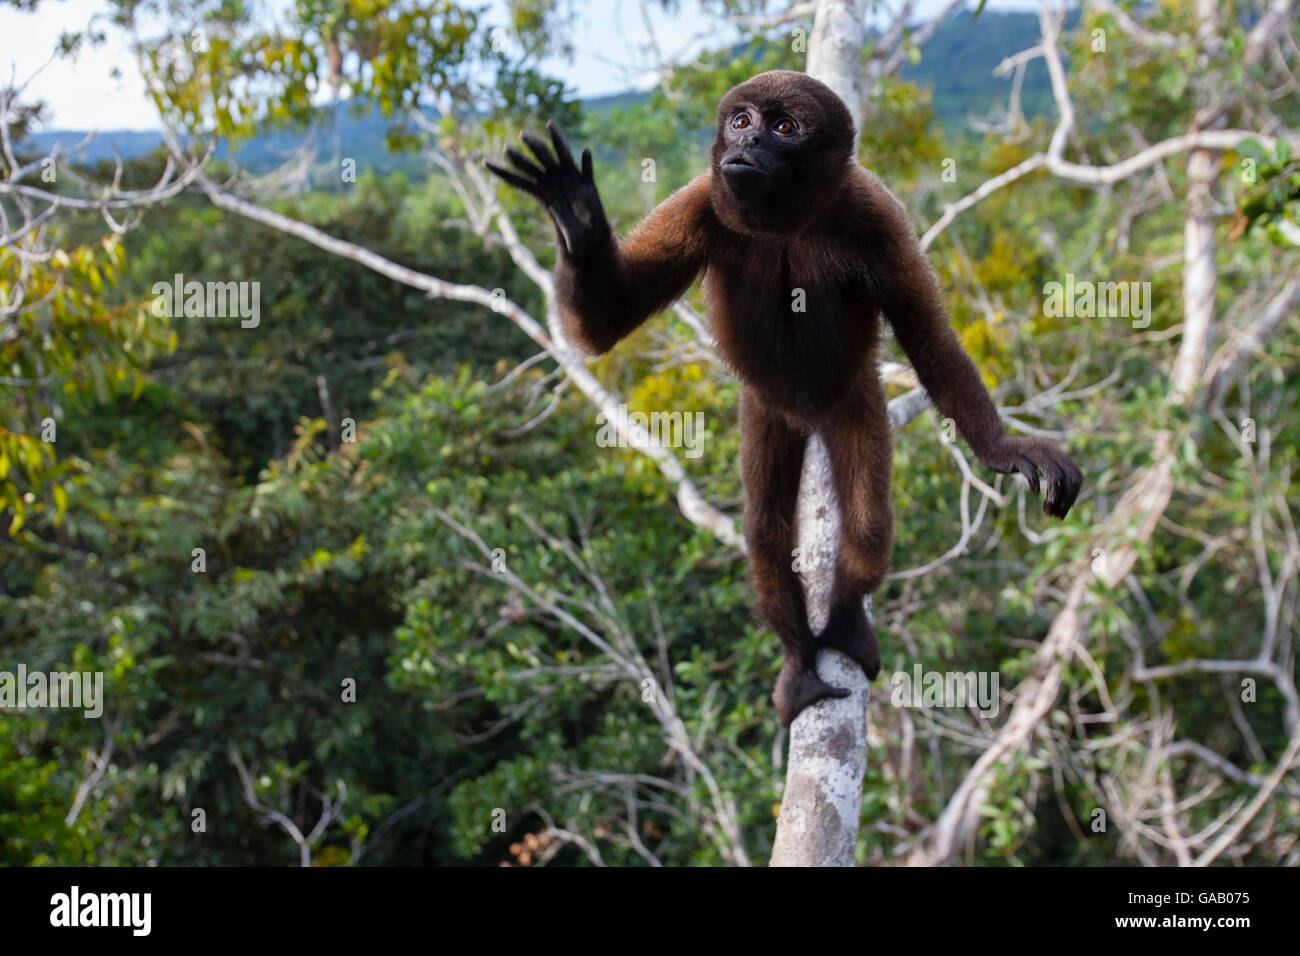 Common woolly monkey (Lagothrix lagotricha) reaching forward, Ikamaperou Sanctuary, Amazon, Peru. Stock Photo